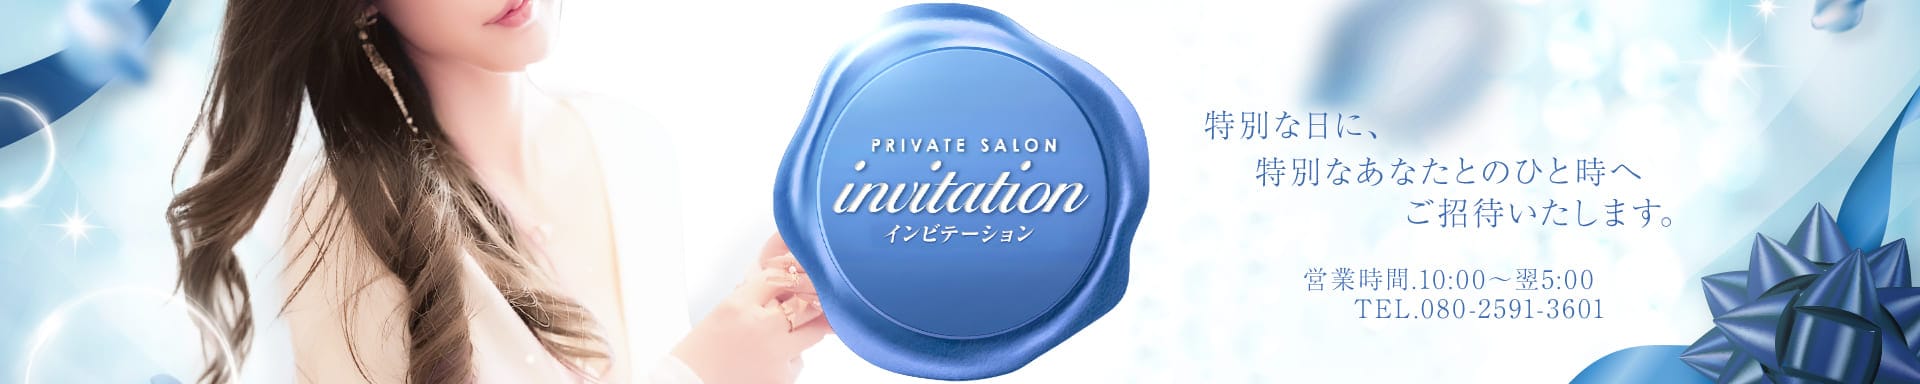 invitation -インビテーション- - 福岡市・博多